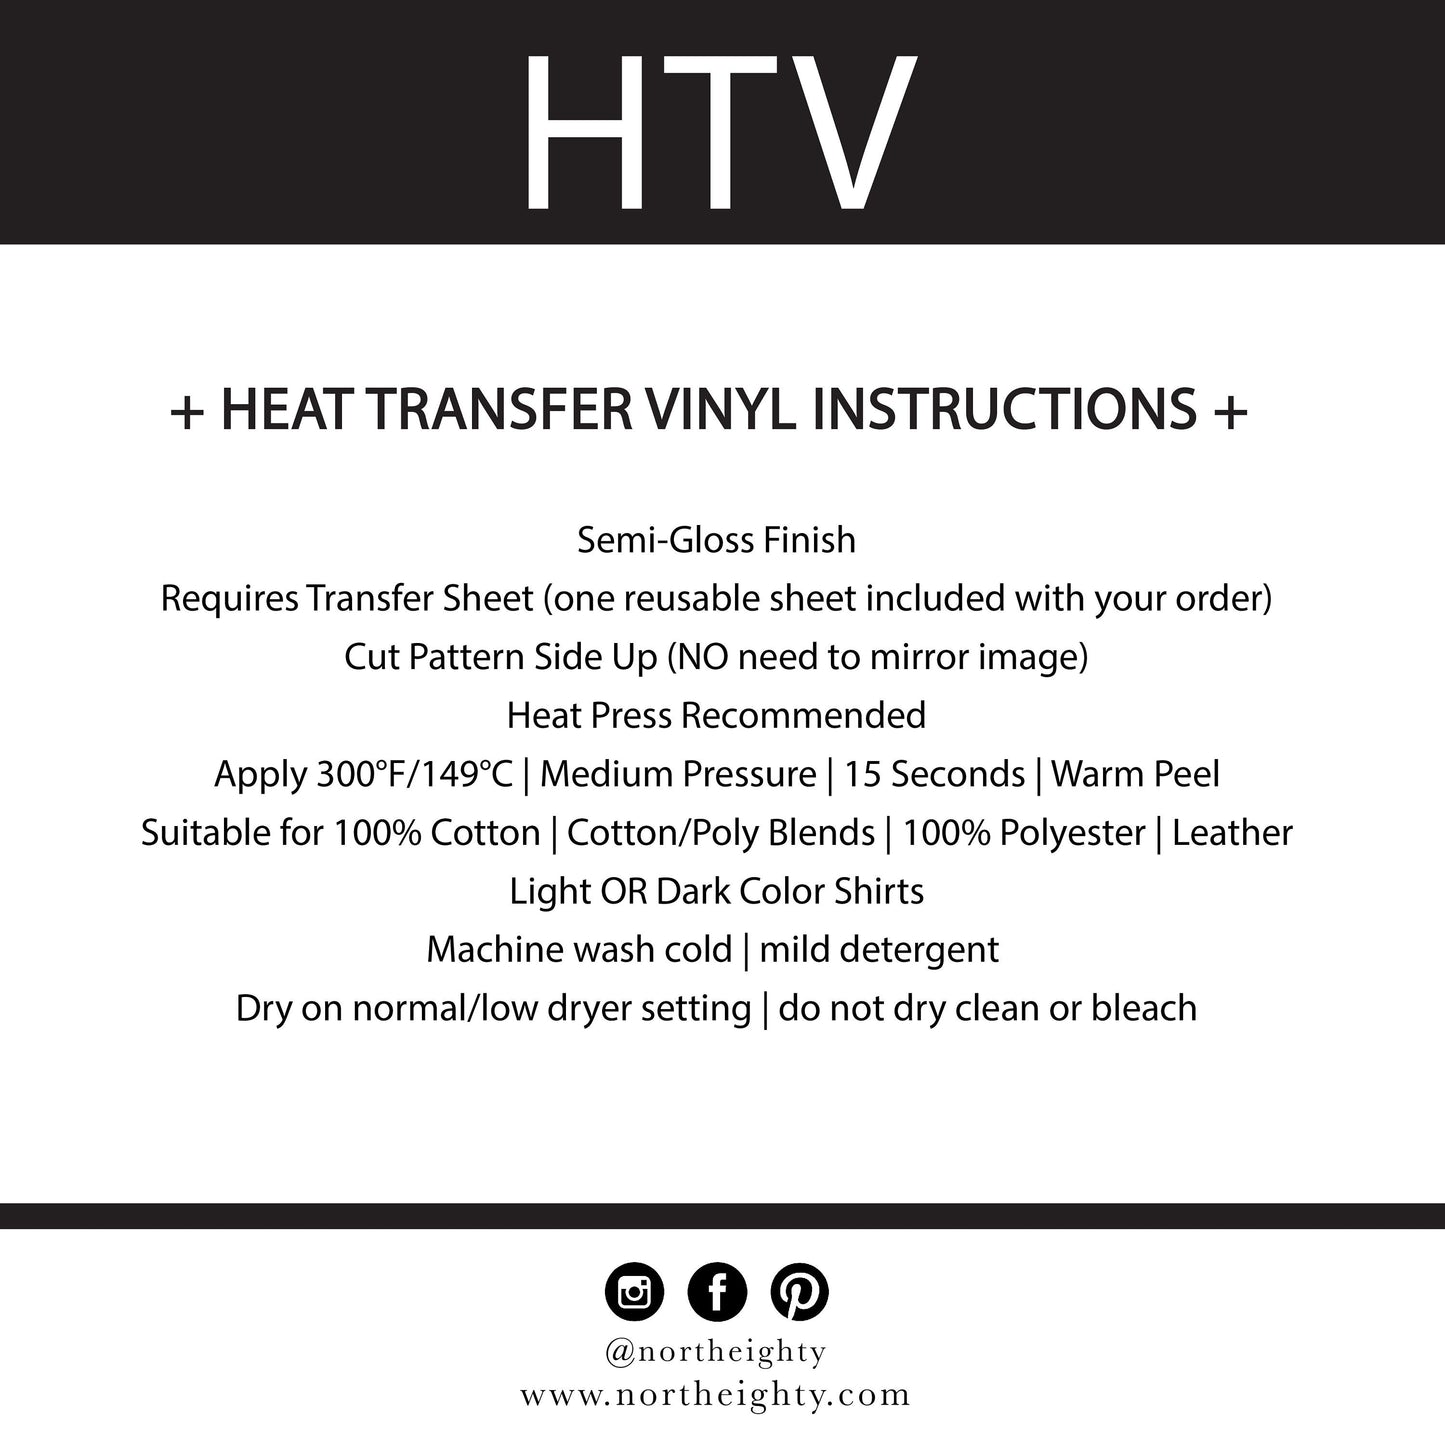 Vinyl - Black And White Vinyl - HTV - Heat Transfer Vinyl - Adhesive Vinyl - Sublimation - Flood Sheet - Paper - Black and White - Zebra